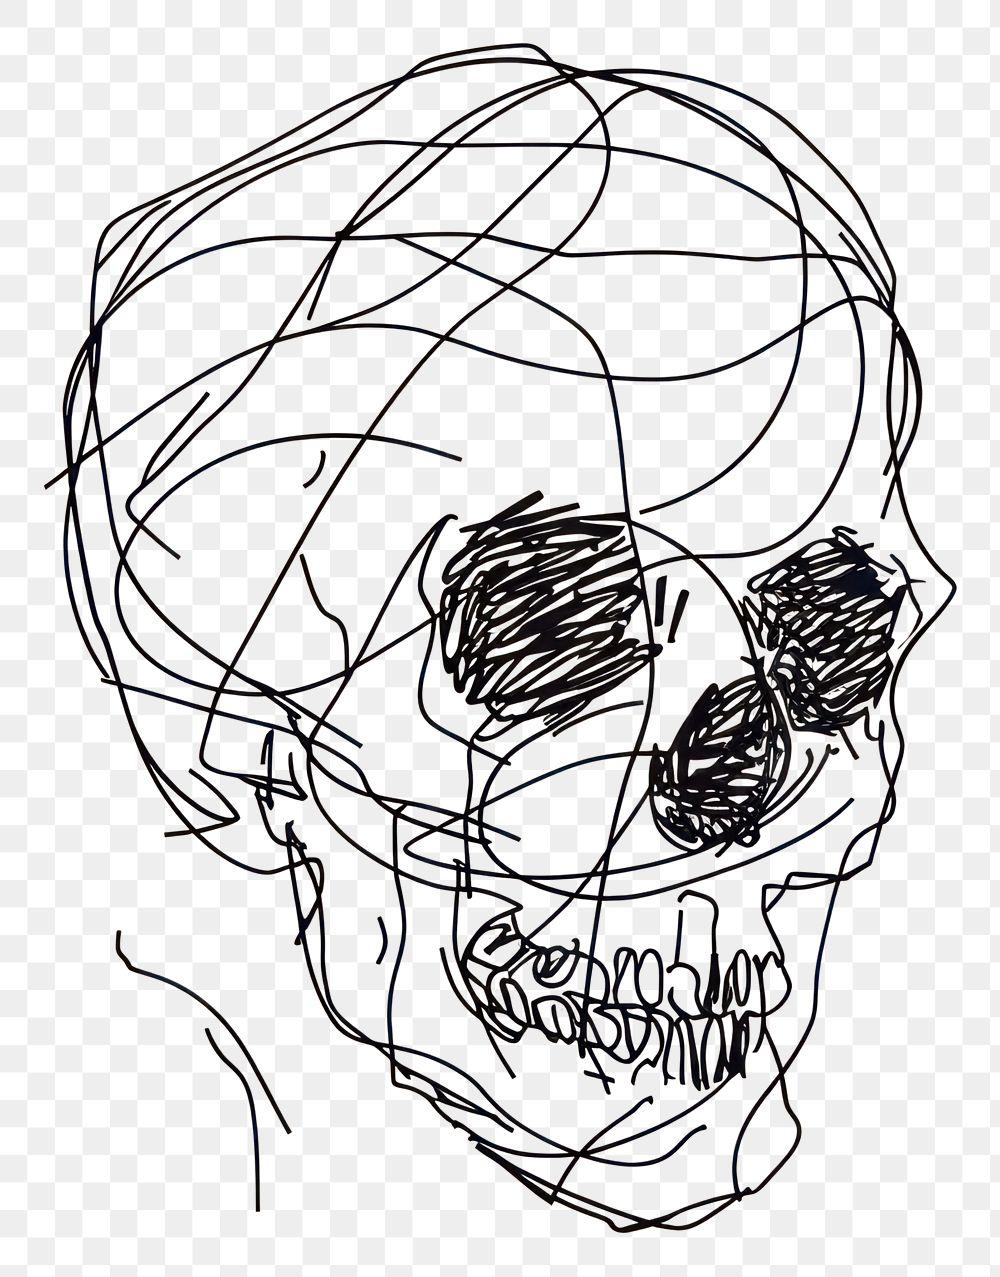 PNG Hand drawn of skull drawing sketch art.